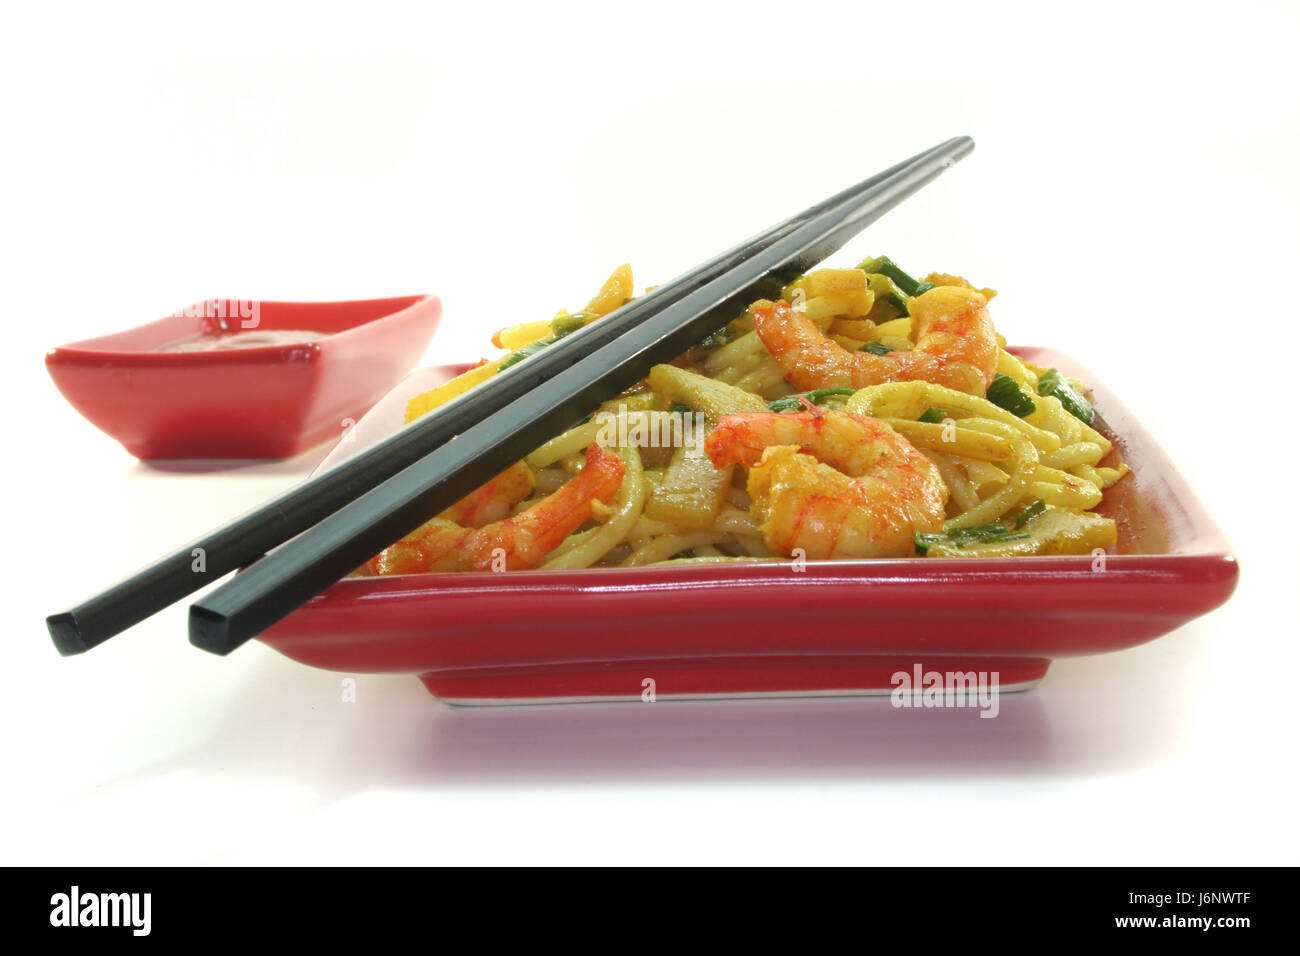 noodles vegetable shrimps fried macro close-up macro admission close up view Stock Photo